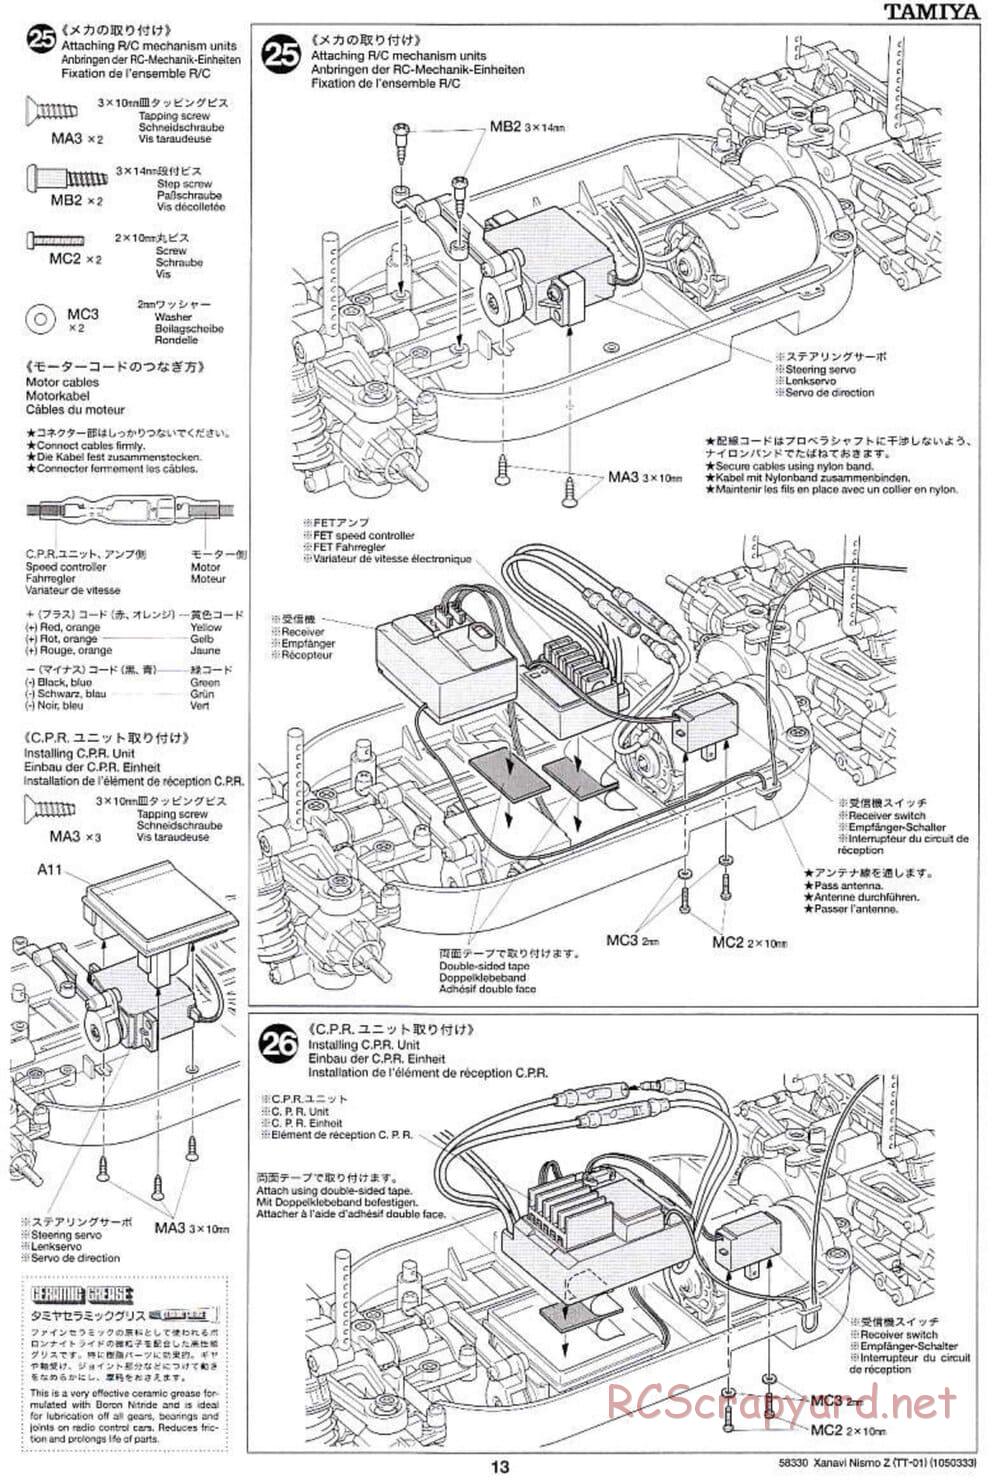 Tamiya - Xanavi Nismo Z - TT-01 Chassis - Manual - Page 13